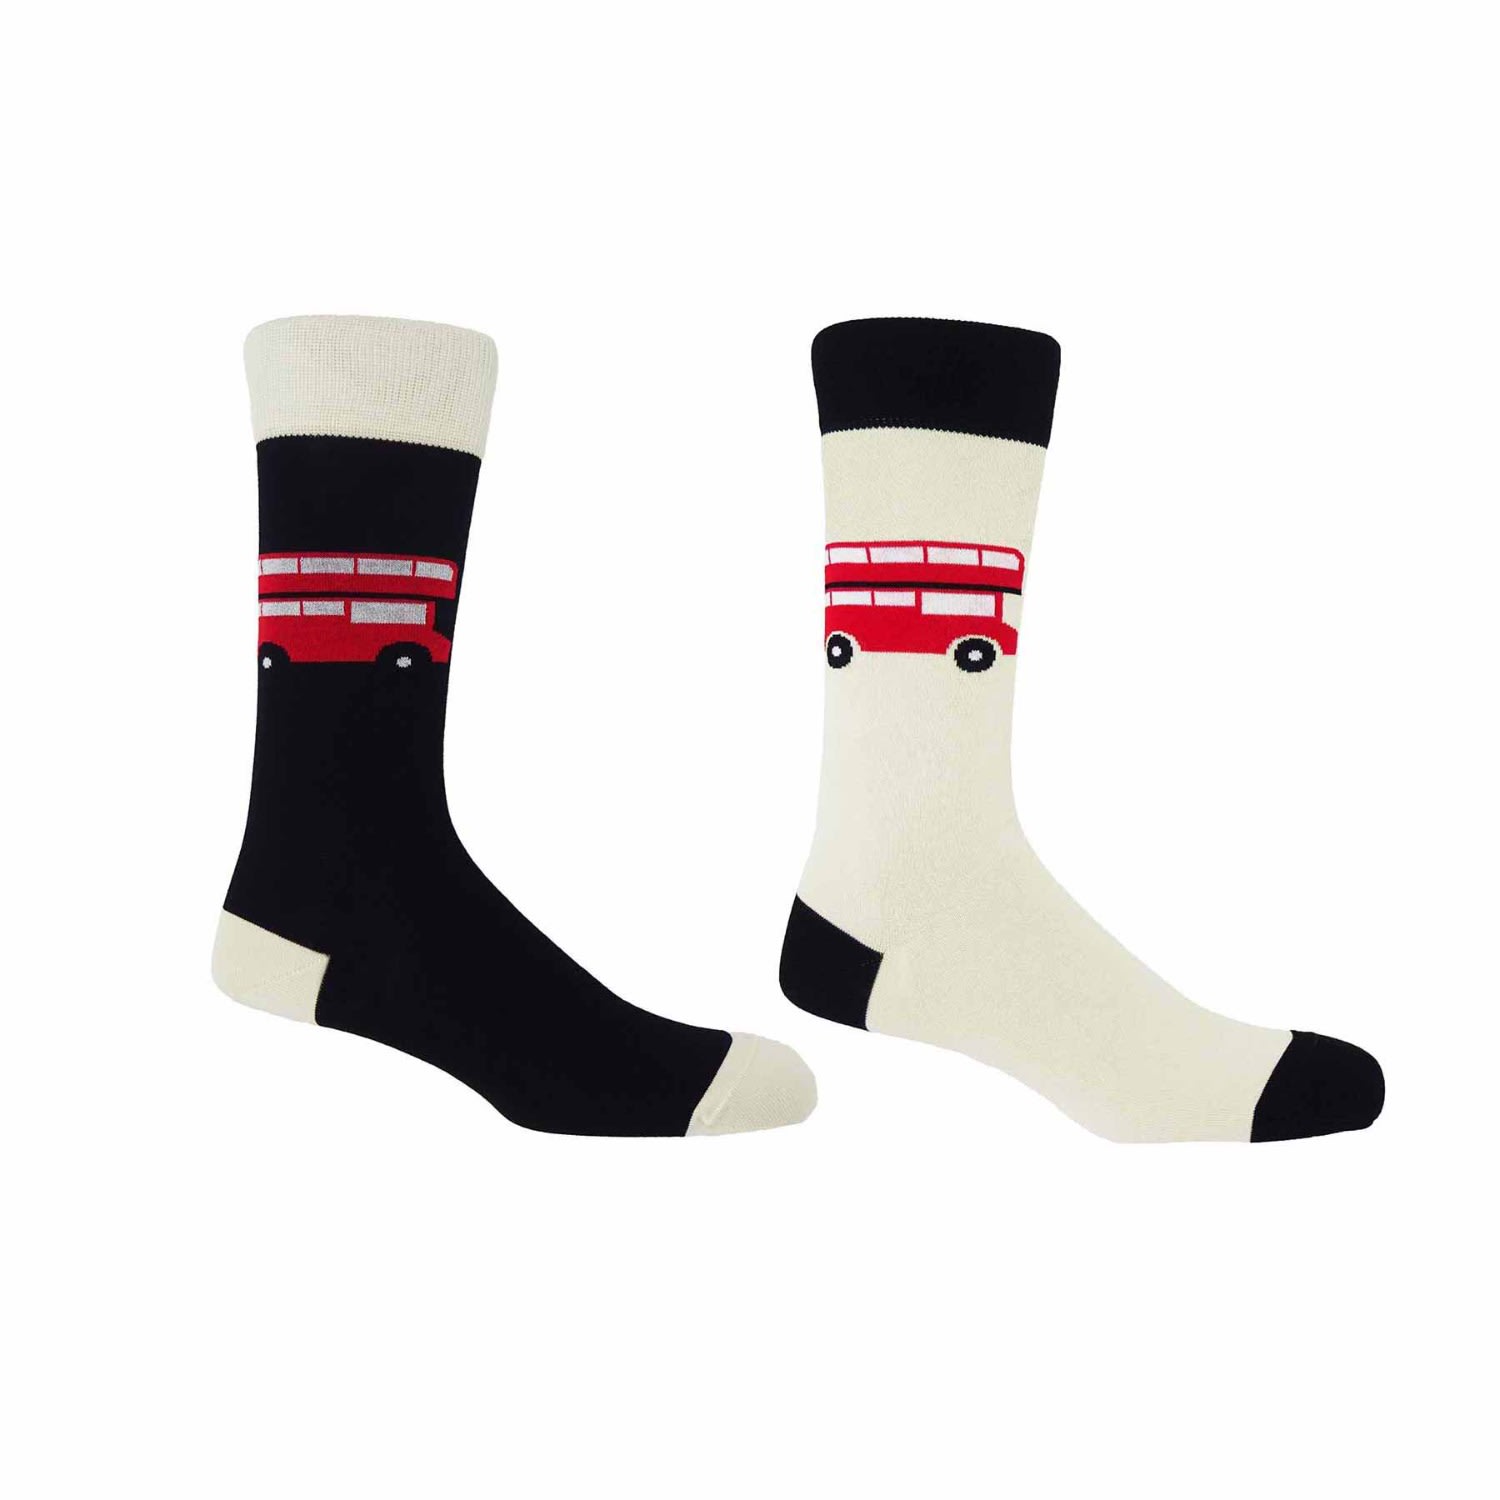 Black & Cream London Bus Men’s Socks 2 Pack One Size Peper Harow - Made in England